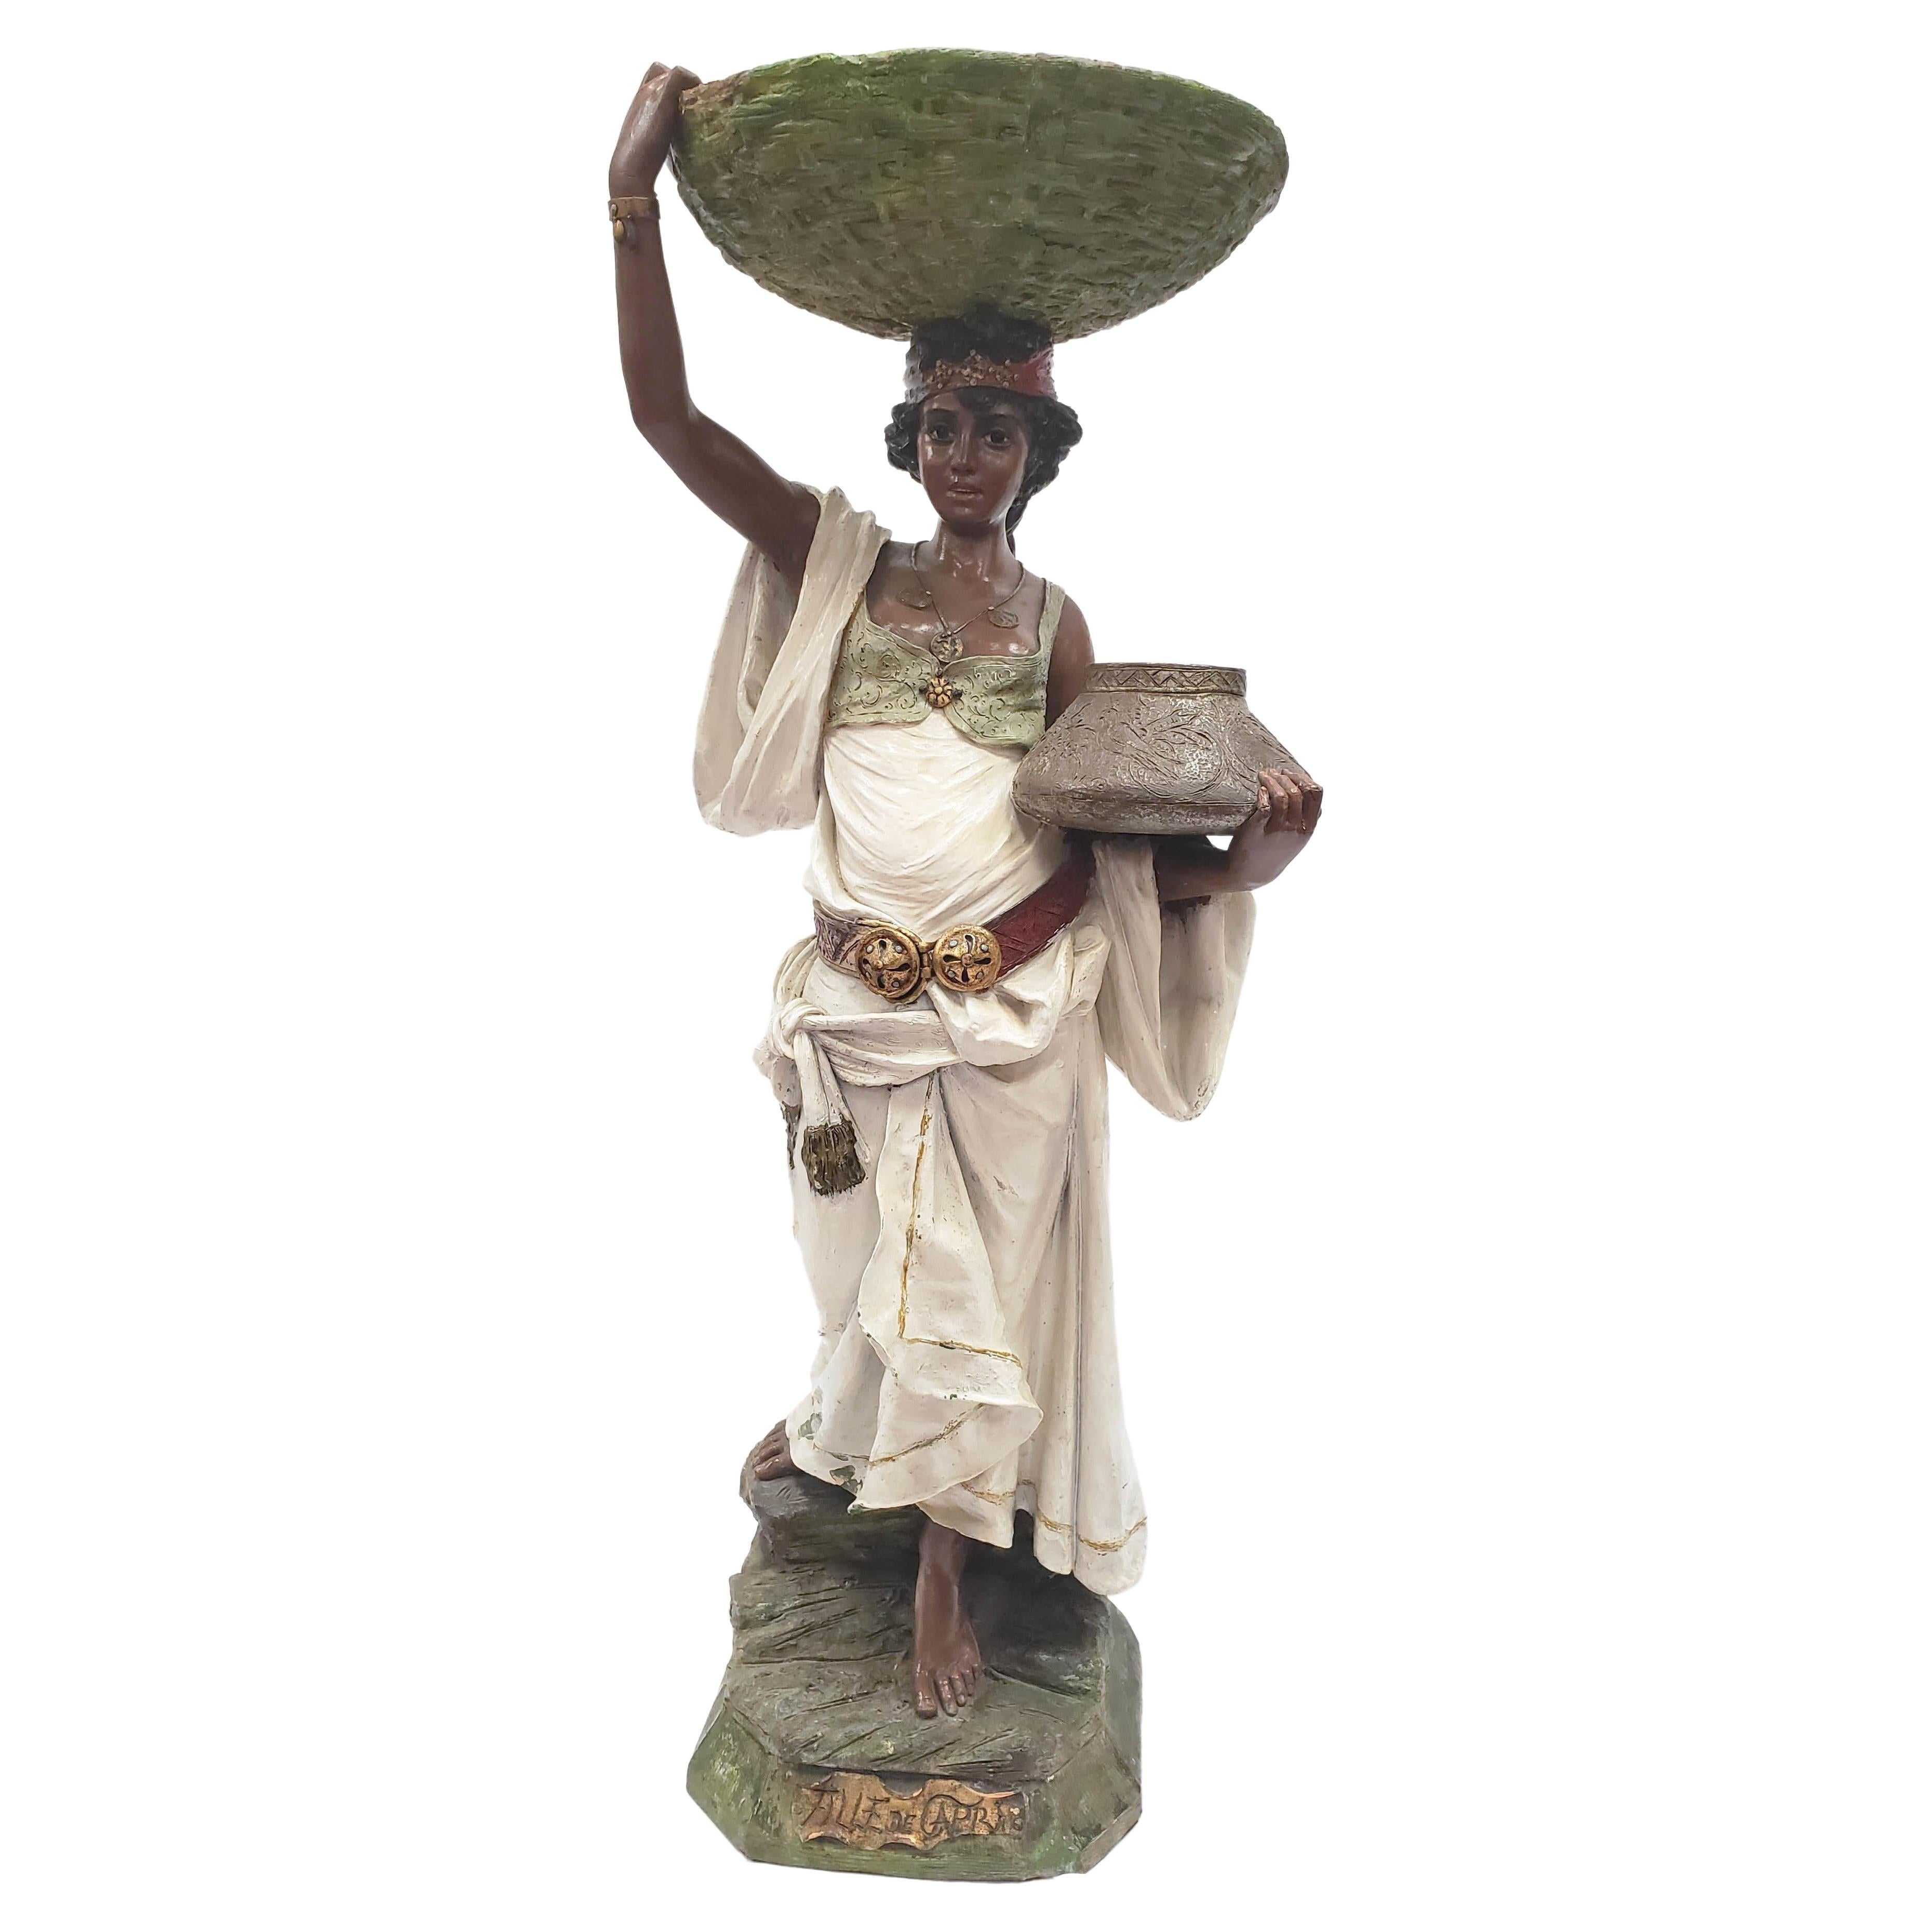 19th Century Terracotta Uriela Statue, Titled "Fille de Capri" For Sale